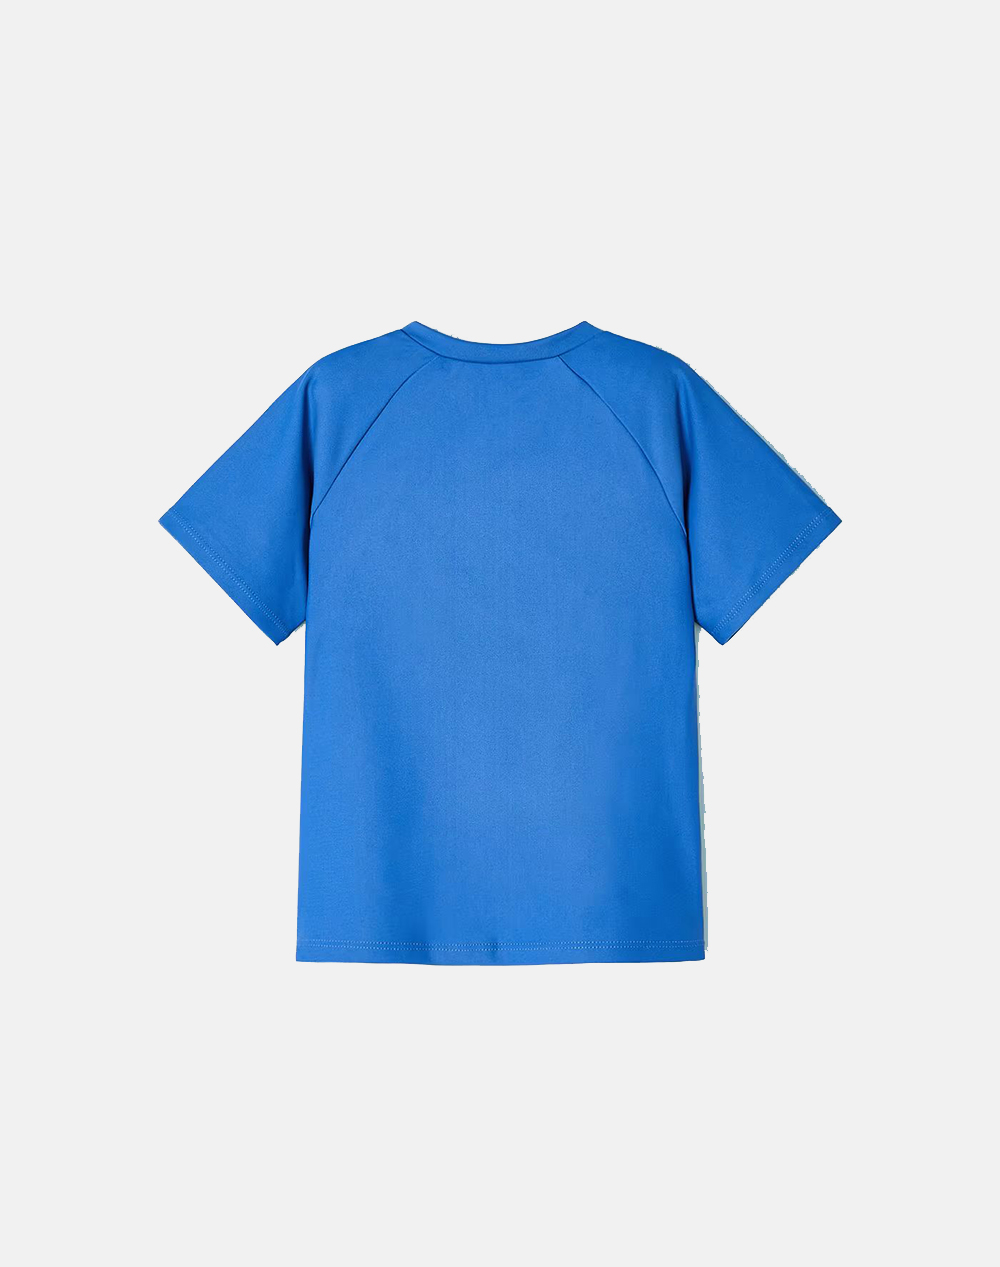 MAYORAL T-shirt short/UVA protection